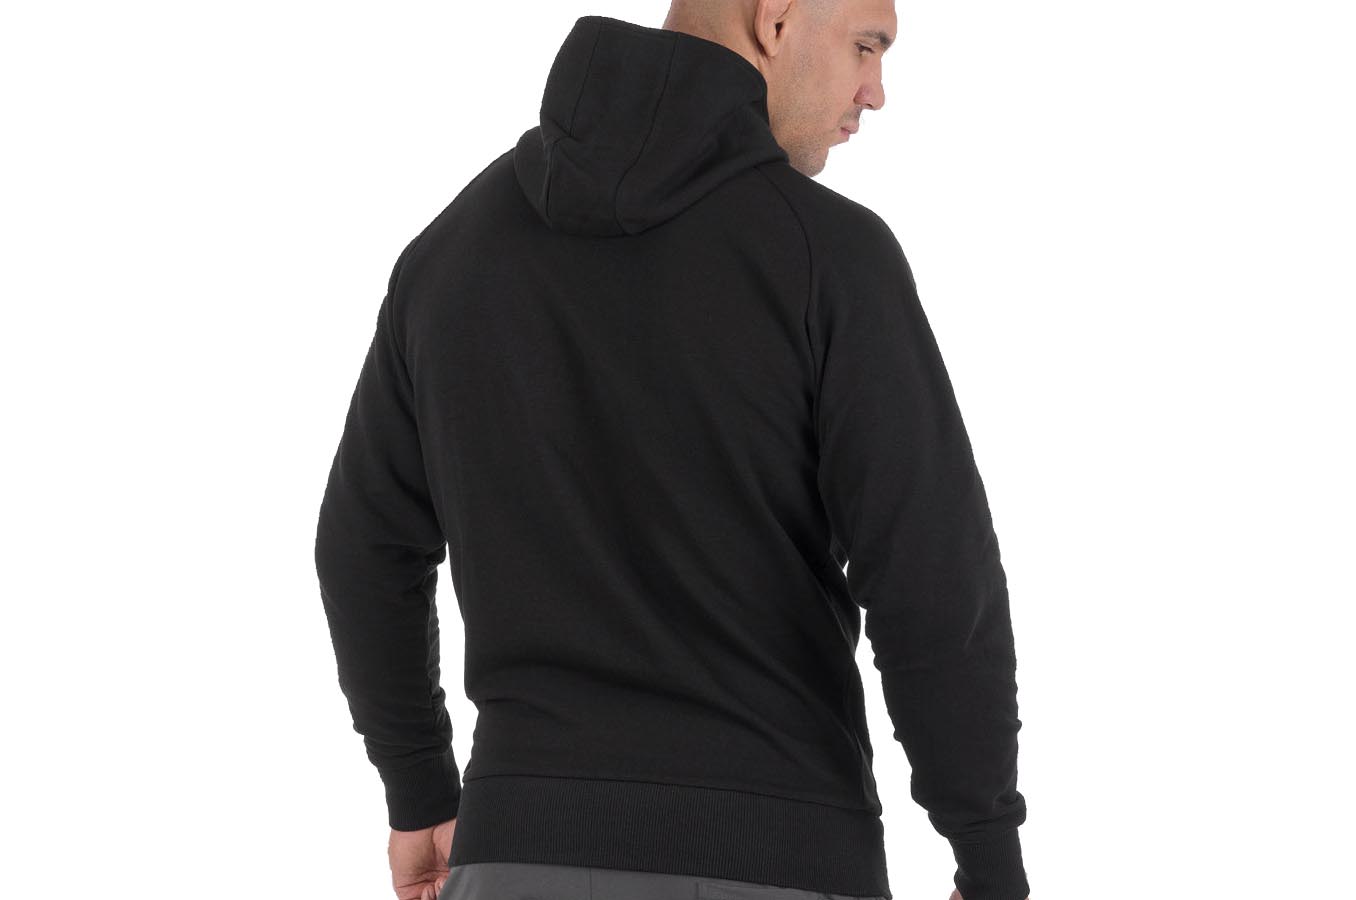 PHANTOM martial arts hoodie for training & leisure